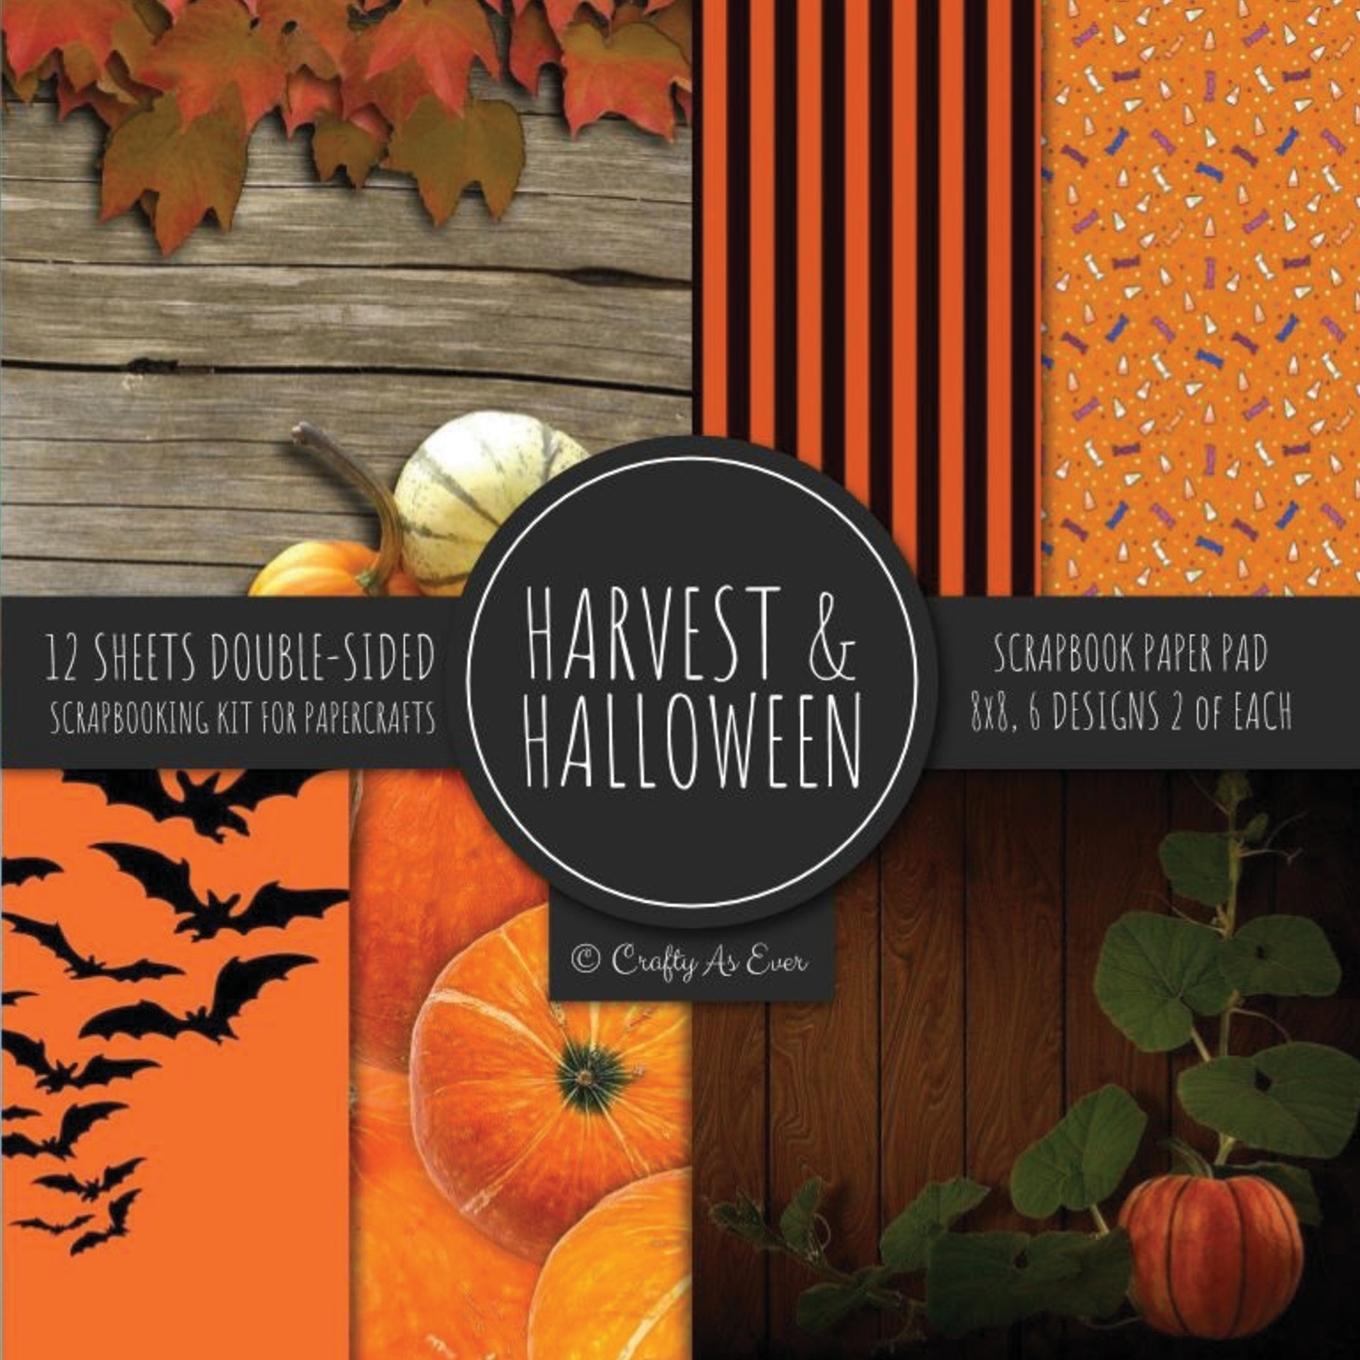 Книга Harvest & Halloween Scrapbook Paper Pad 8x8 Scrapbooking Kit for Papercrafts, Cardmaking, Printmaking, DIY Crafts, Orange Holiday Themed, Designs, Bor Crafty as Ever